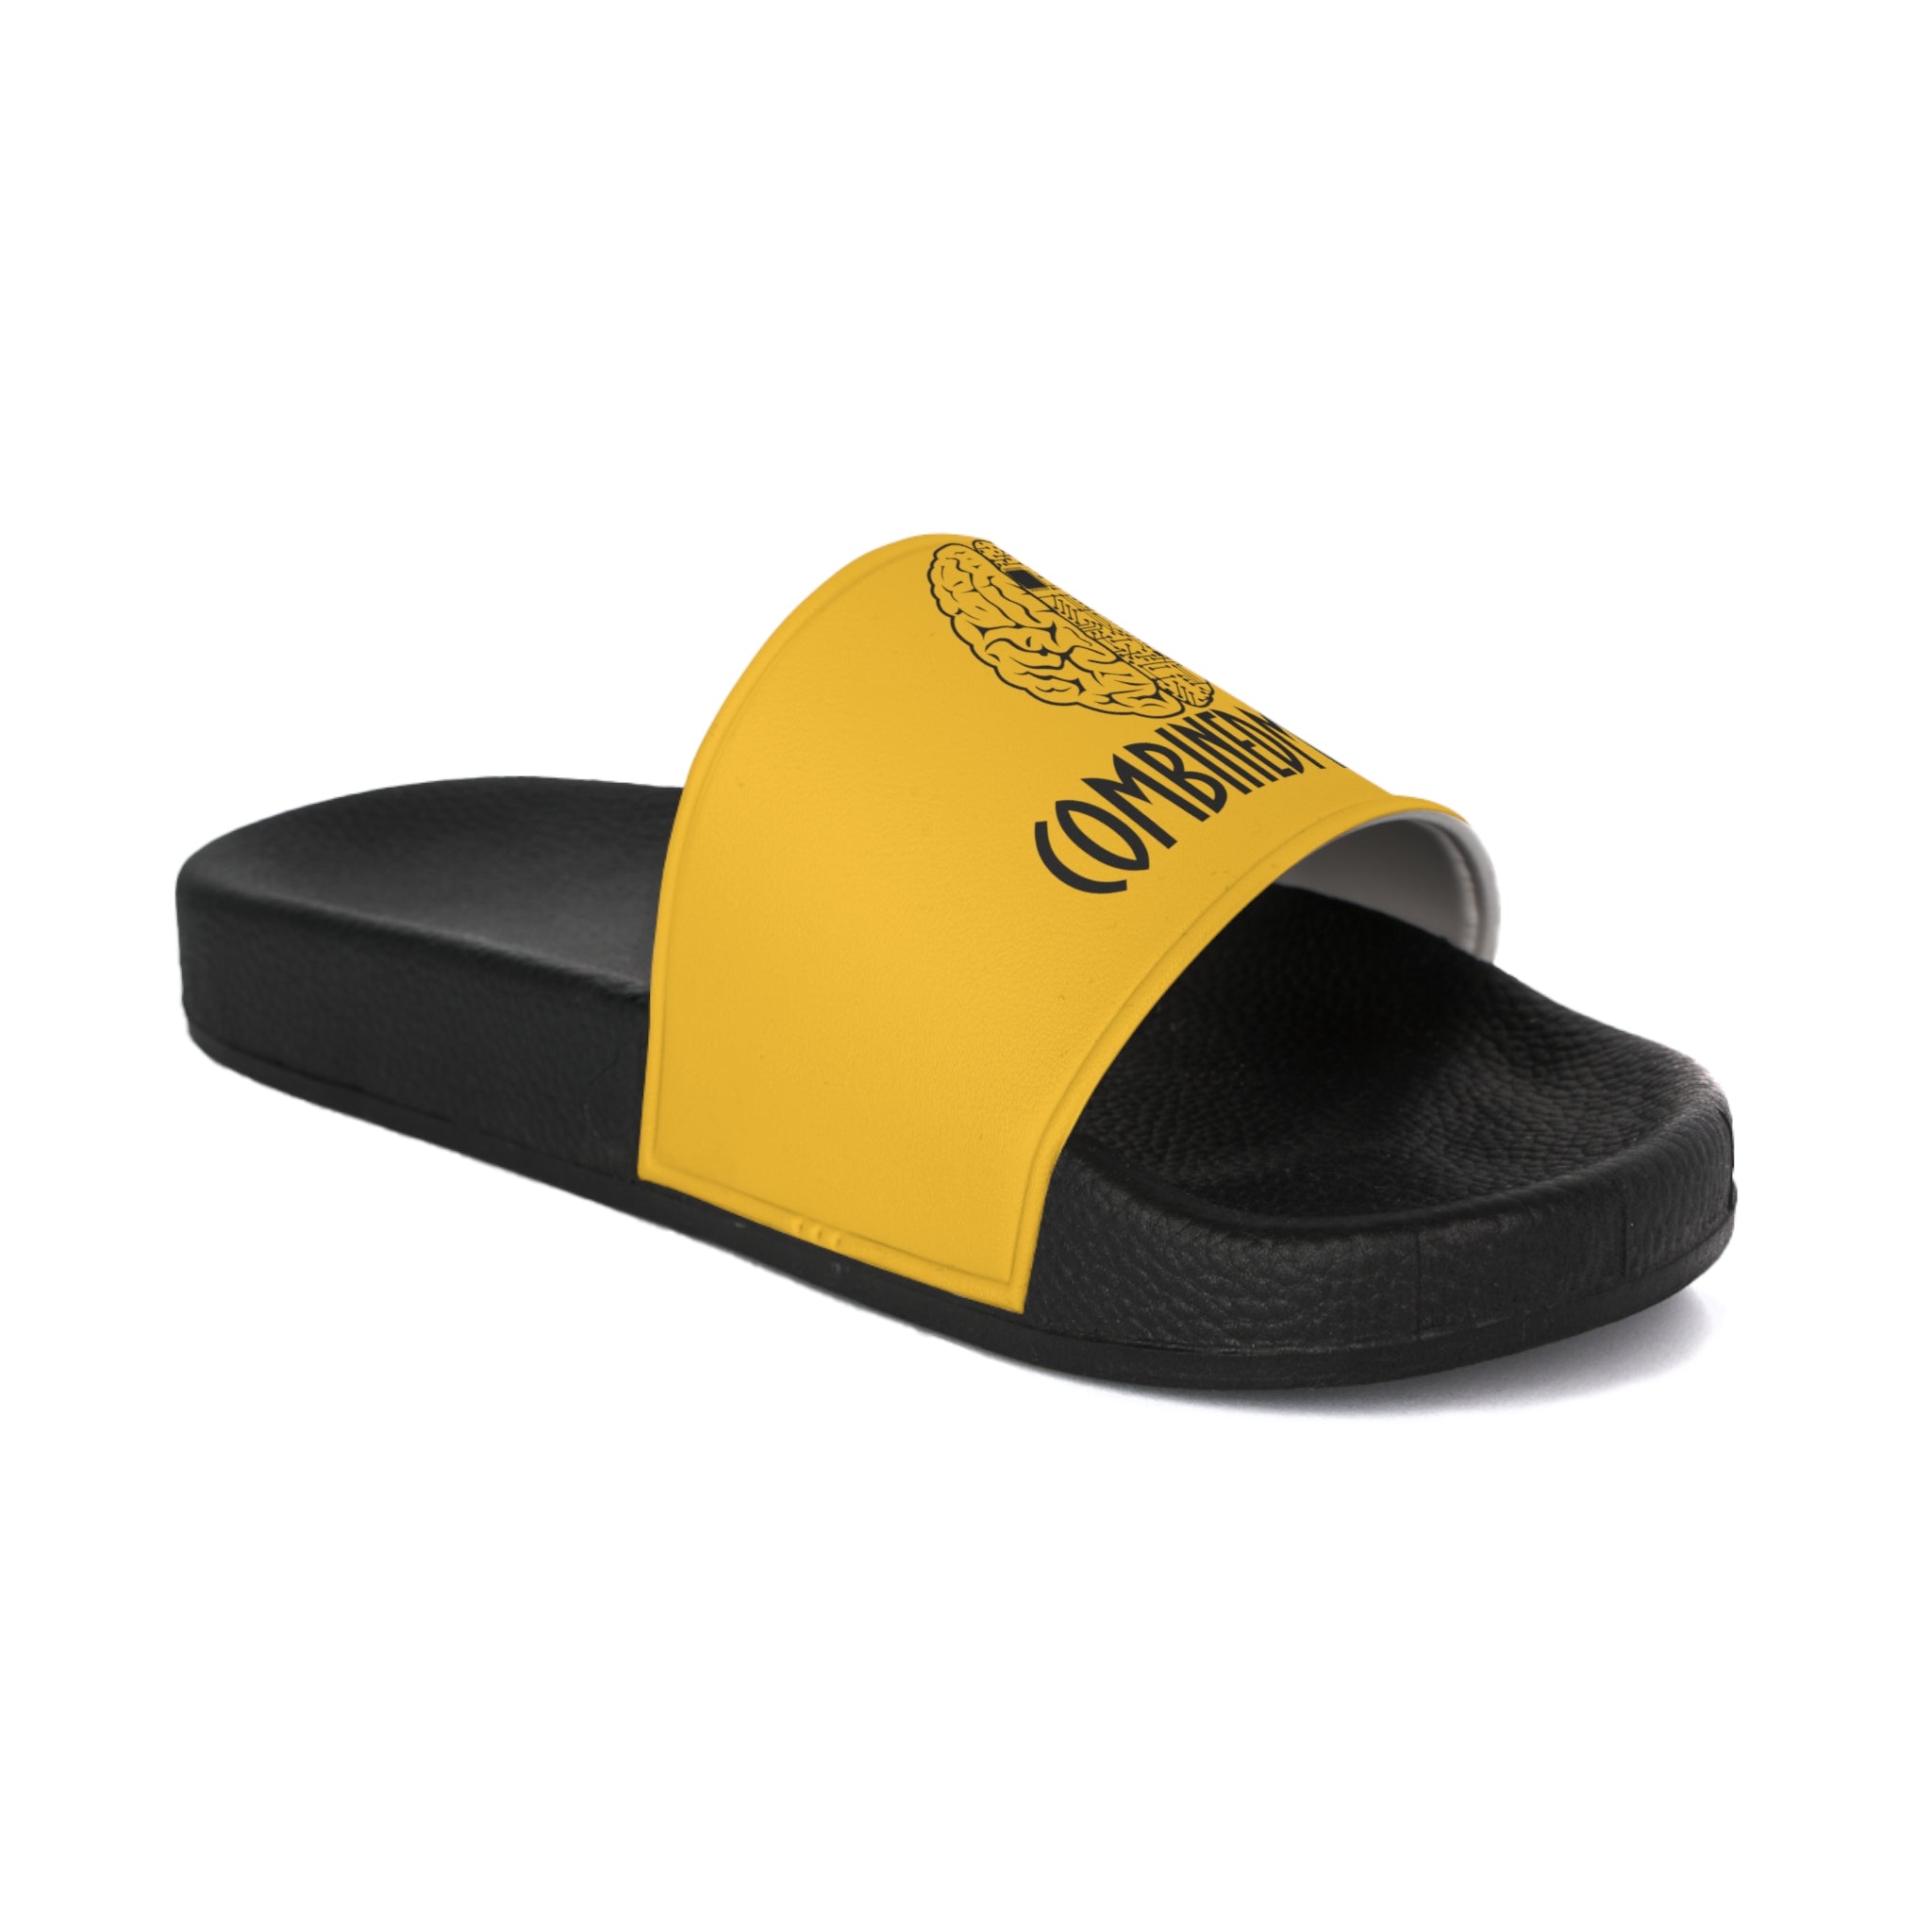 CombinedMinds Men's Slide Sandals